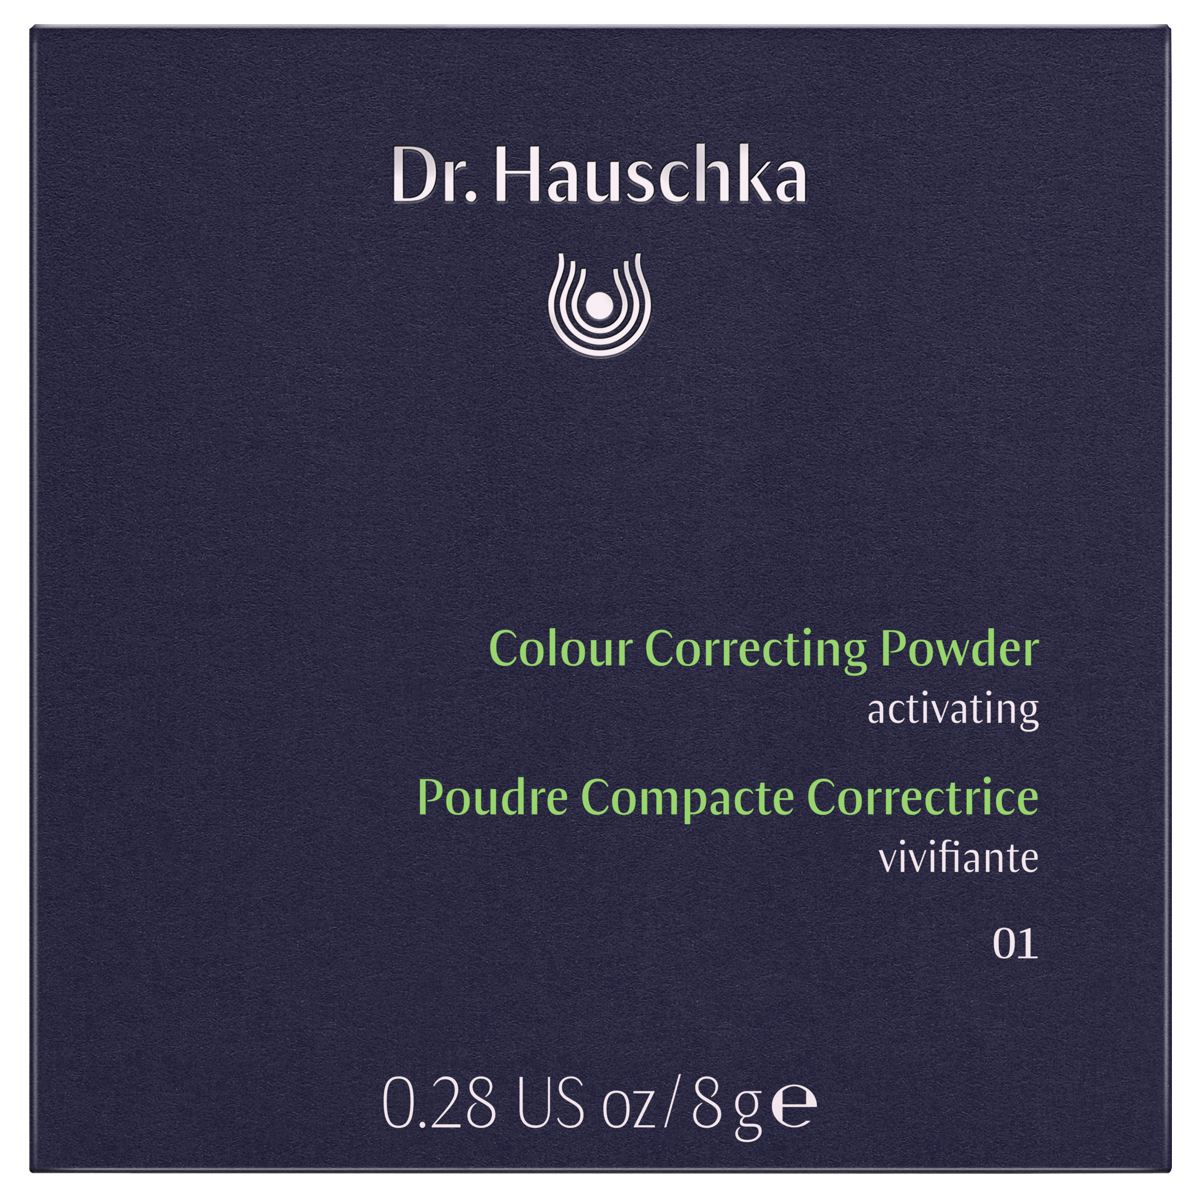 Dr_Hauschka_Colour_Correcting_Powder_01_activating_online_kaufen